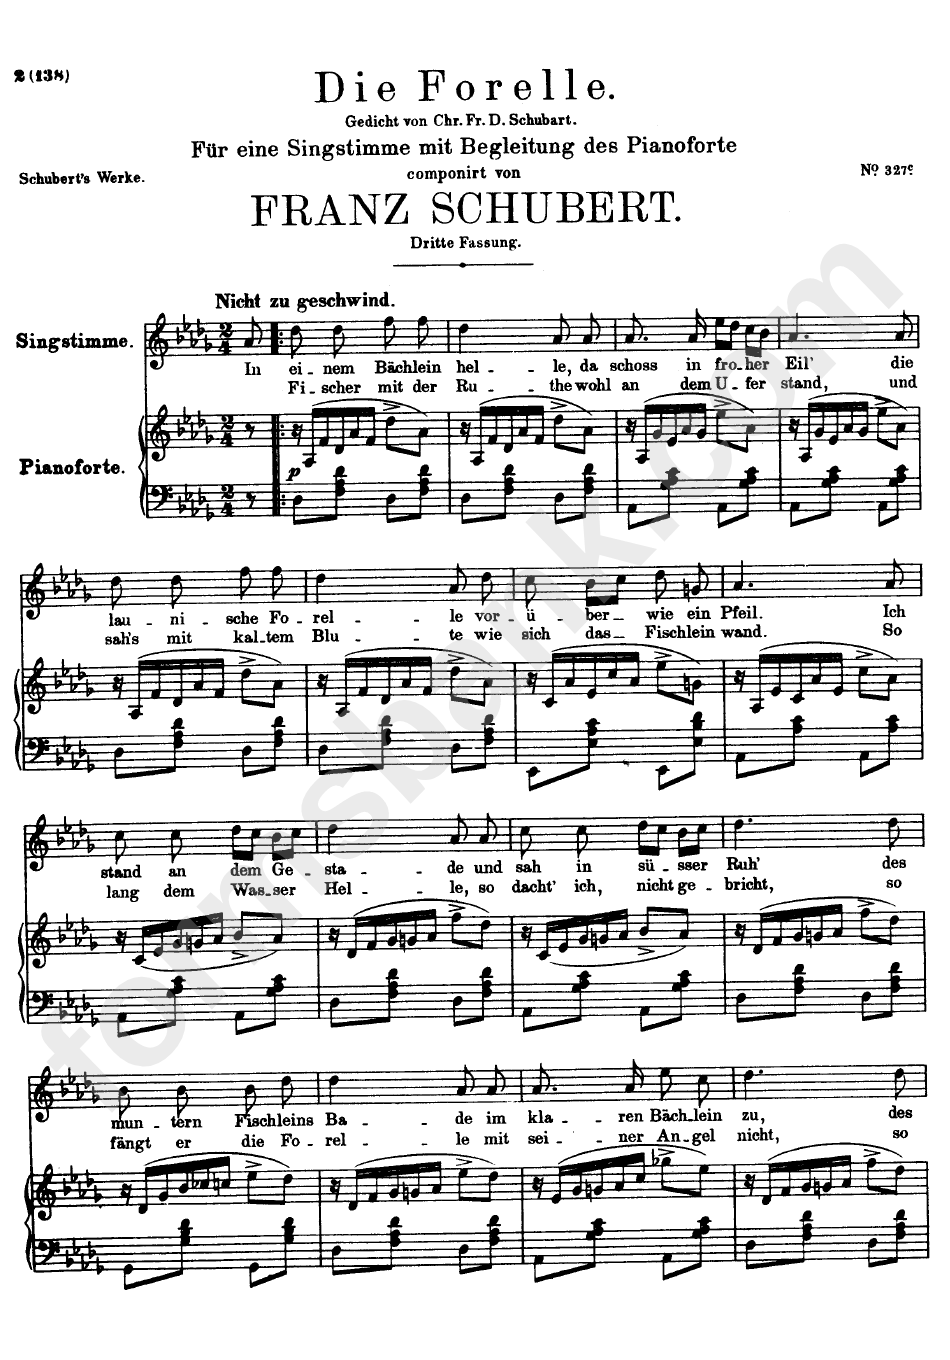 Die Forelle By Franz Schubert Piano Sheet Music